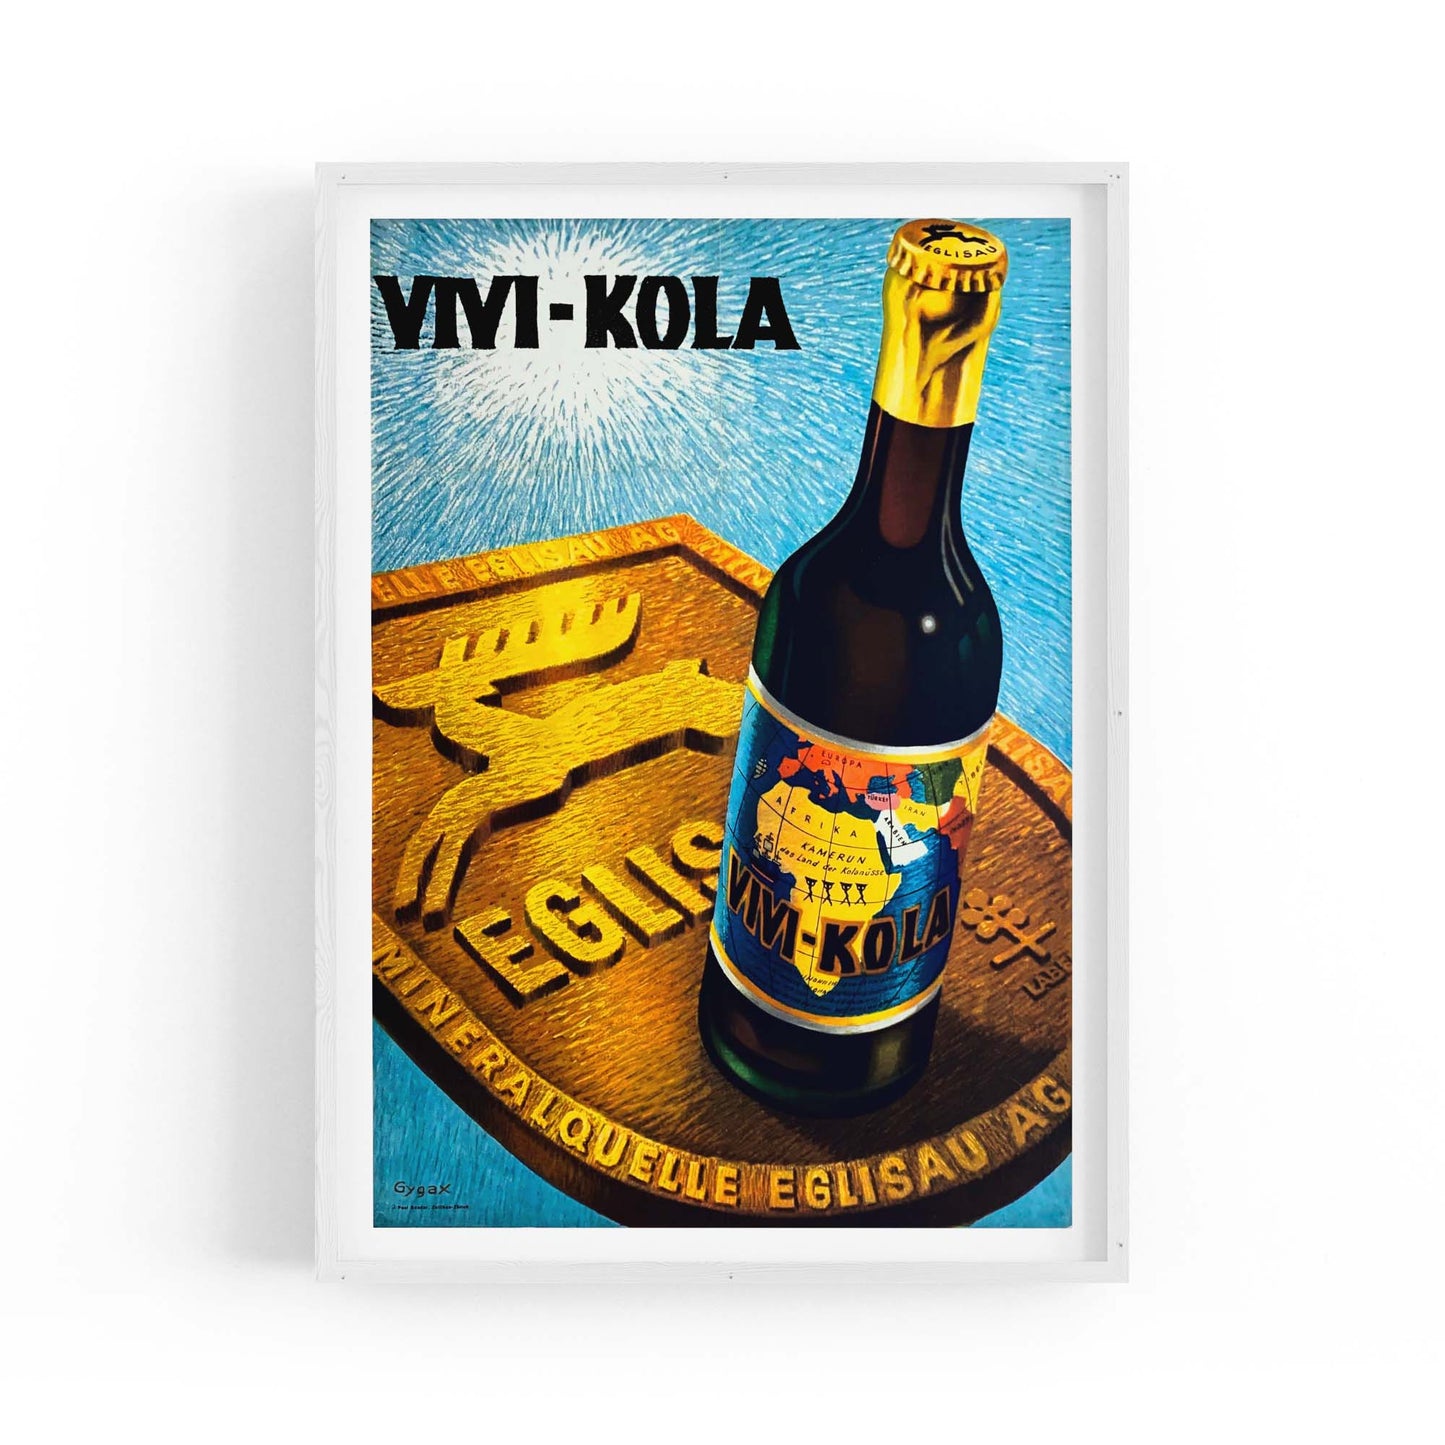 Vivi Kola Vintage Drinks Advert Wall Art - The Affordable Art Company